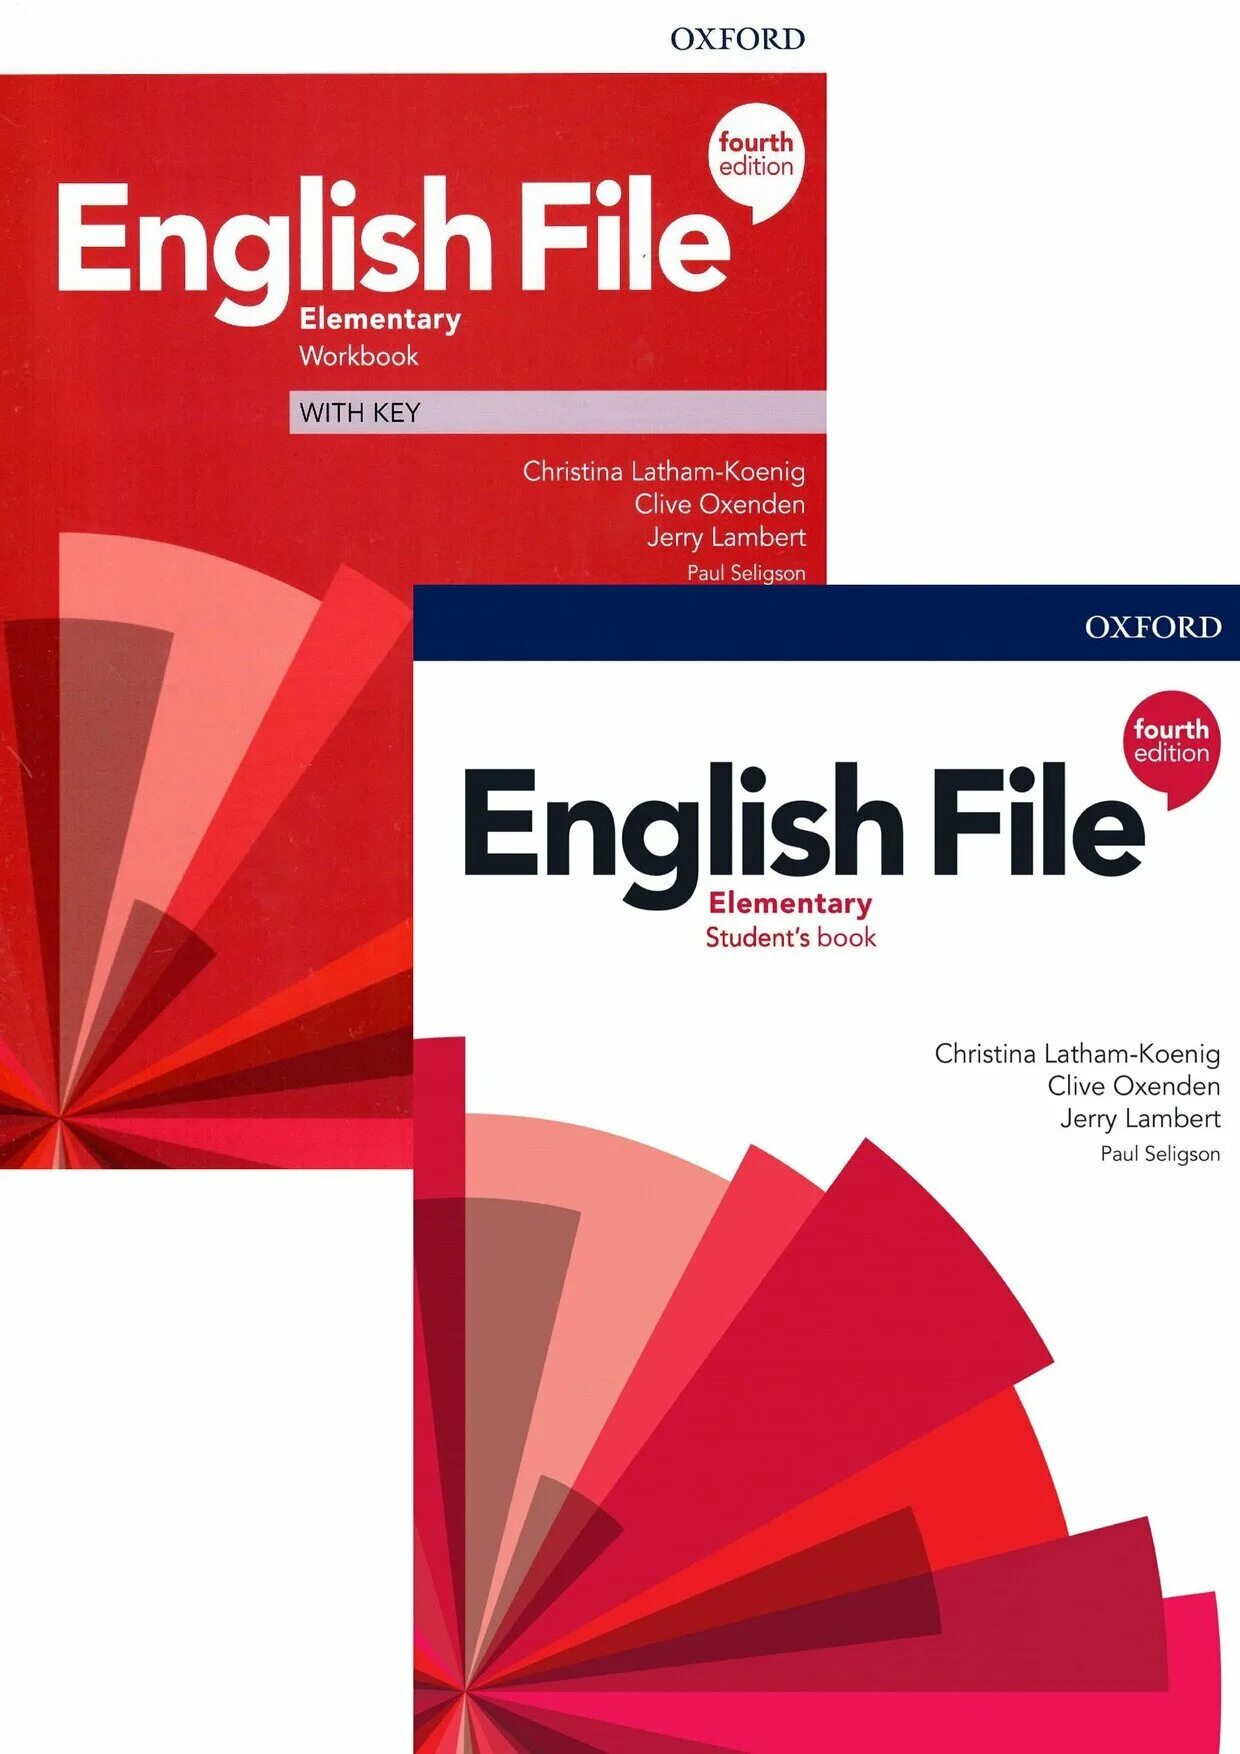 English file Elementary 4th Edition. English file 4th Edition Elementary ответы. English file Elementary Workbook 4th Edition. English file 4th Edition. 4 new english file